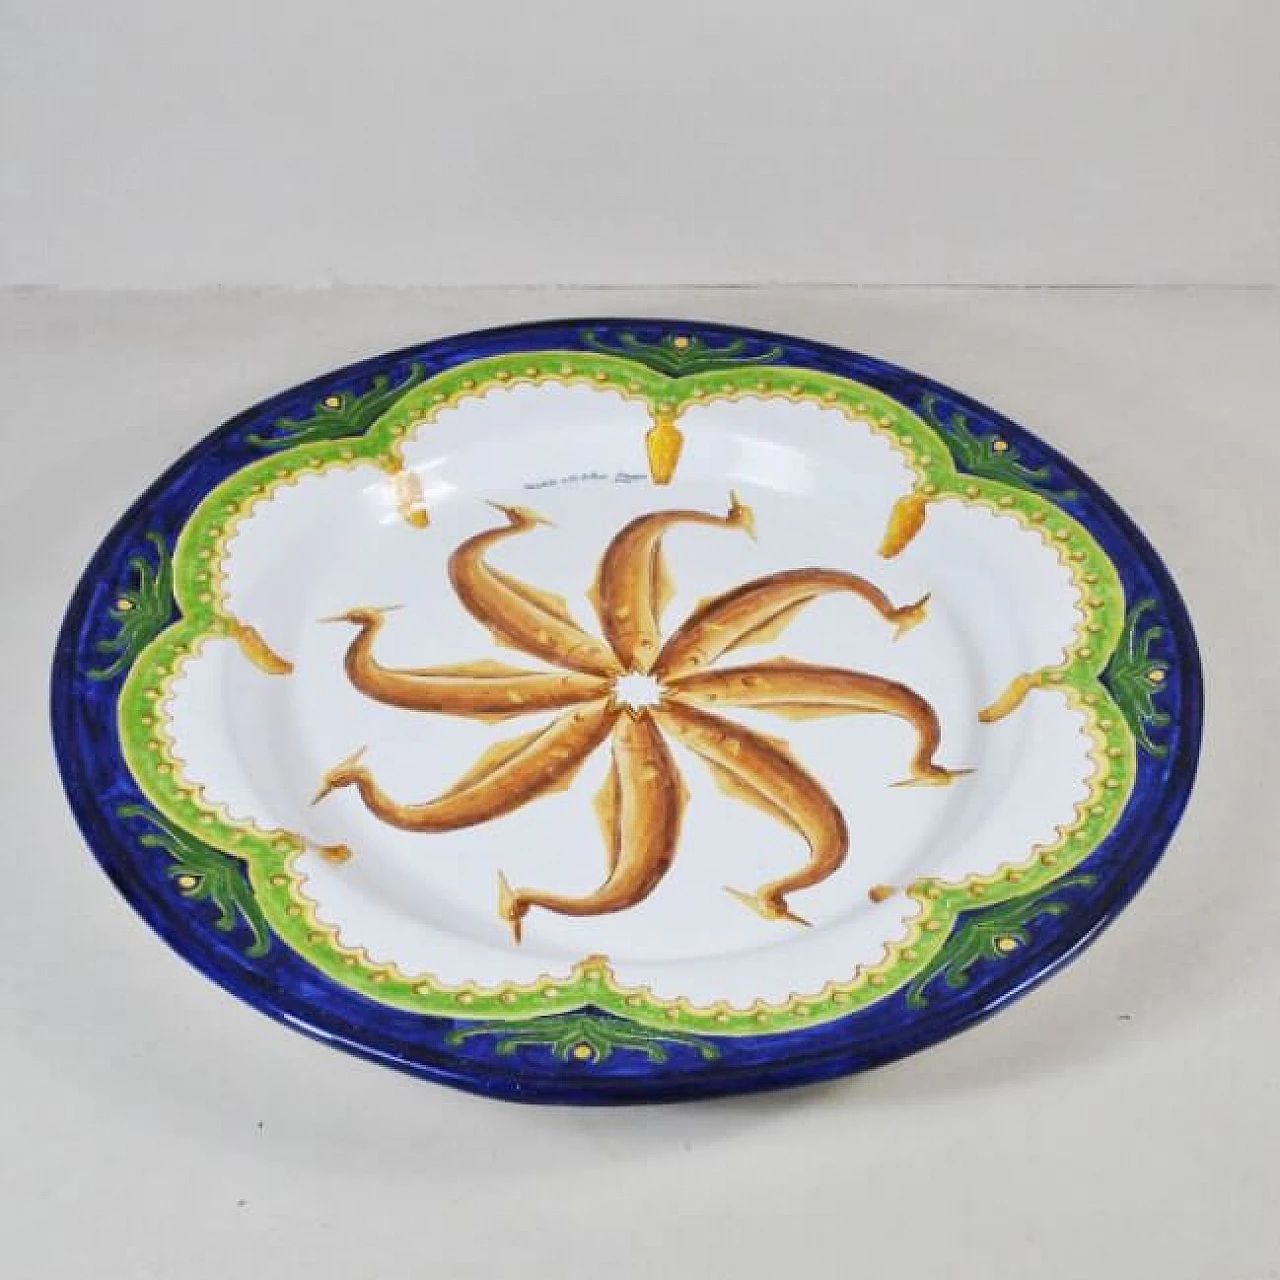 Decorative ceramic plate by Tarshito, 2000 1219715